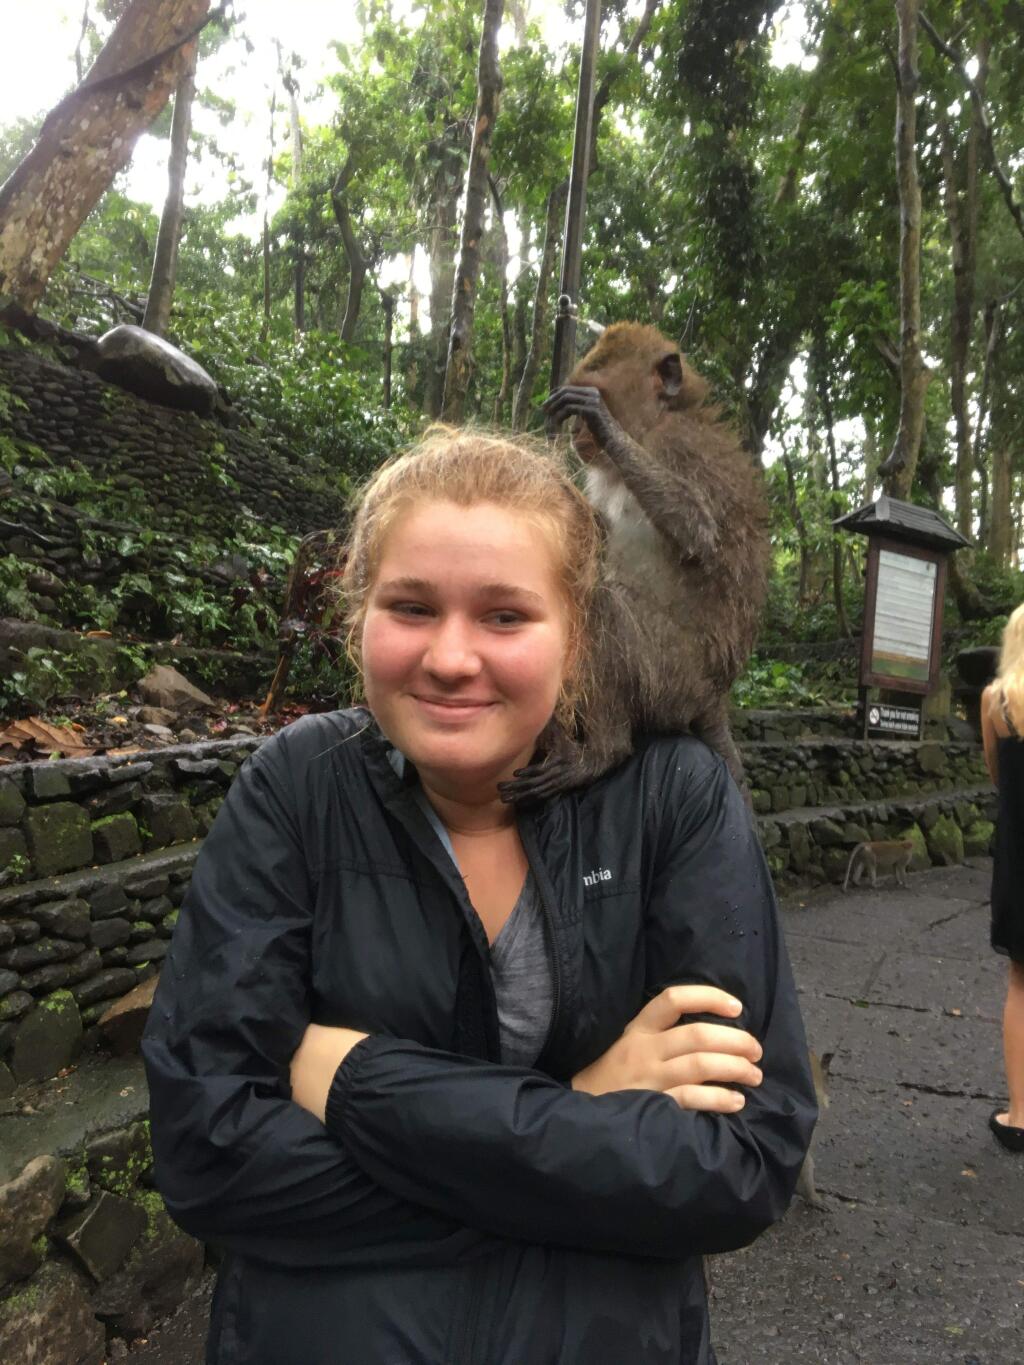 Bella Martin with a new monkey friend in Bali.